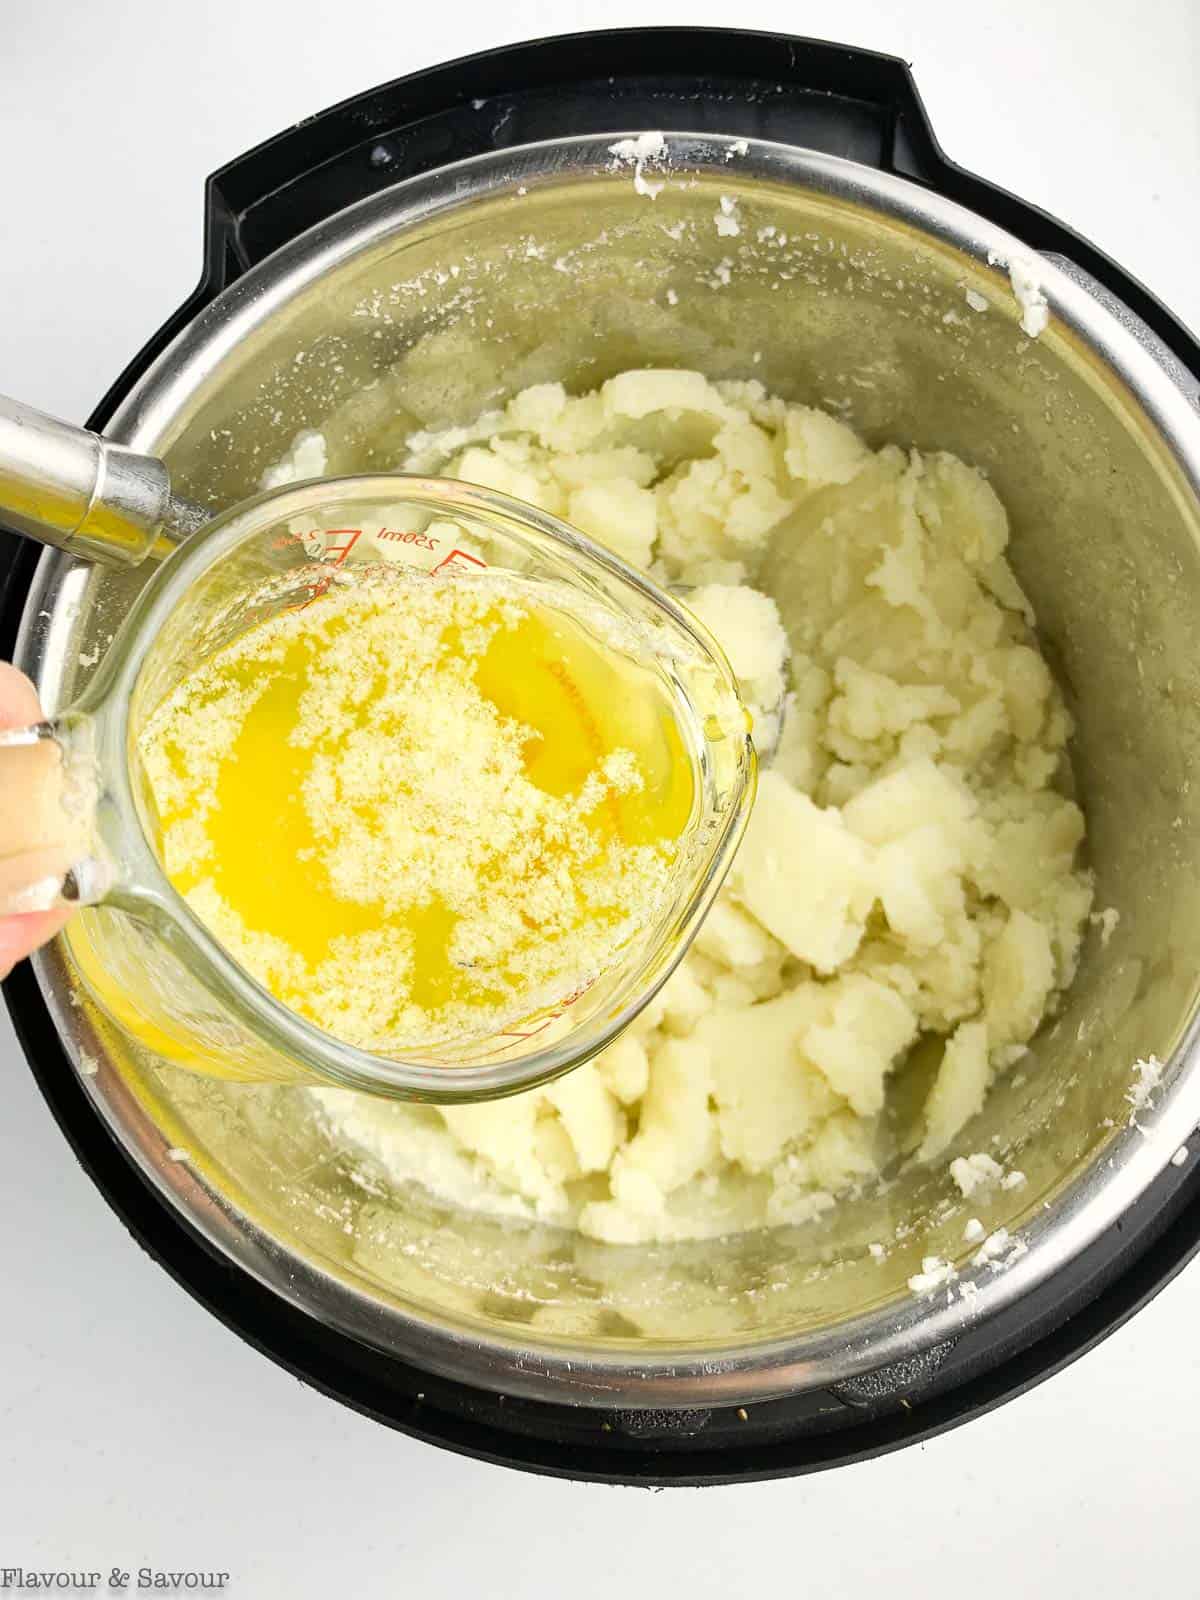 Adding garlic butter to mashed potatoes for vegetarian shepherd's pie.